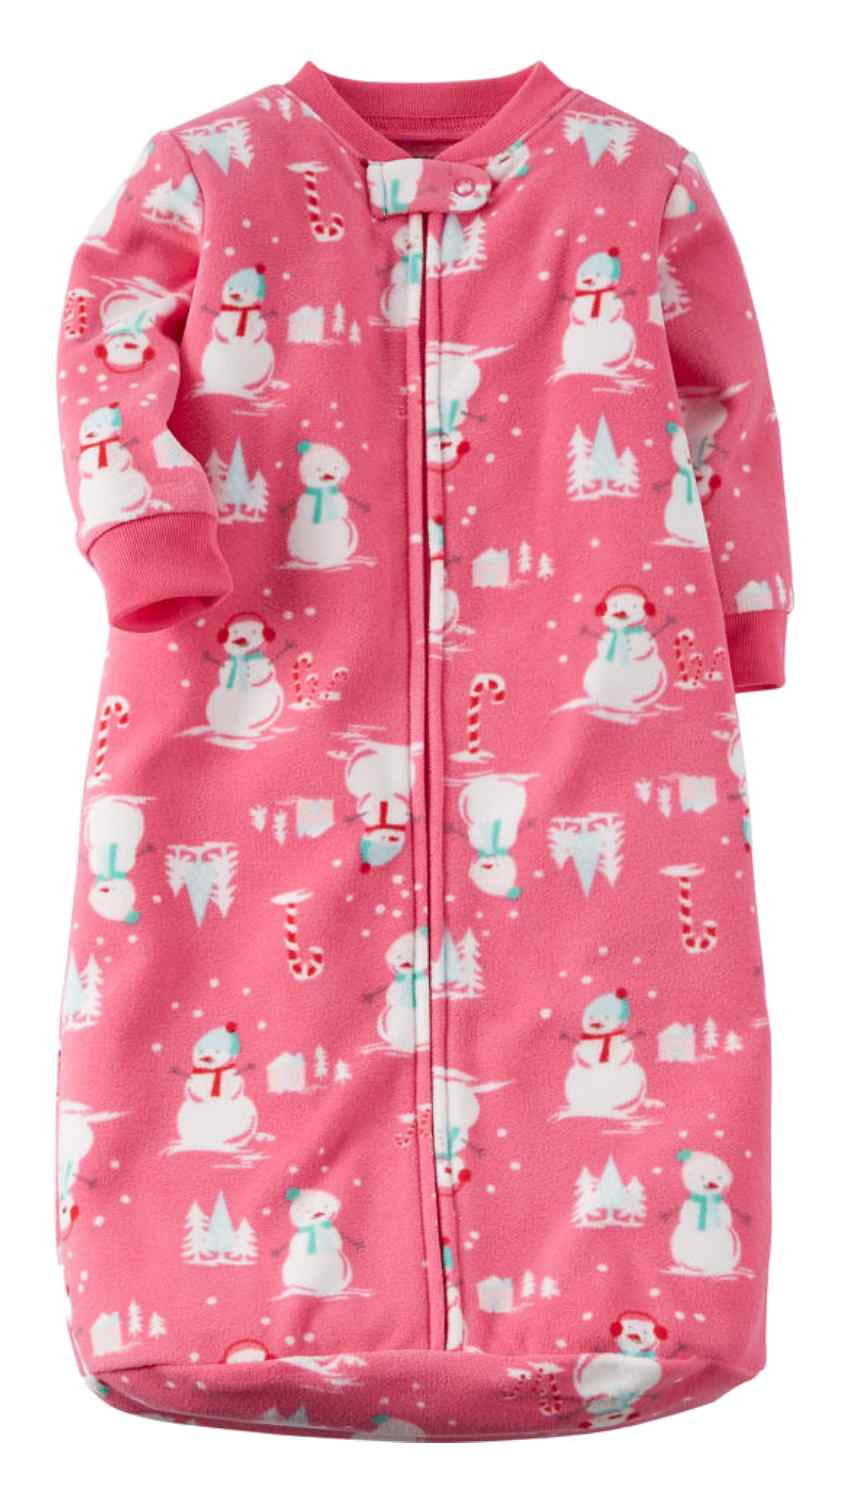 Carter's Carters Infant Girls Pink Fleece Snowman Sleep Sack Baby Bunting Sleepbag Walmart